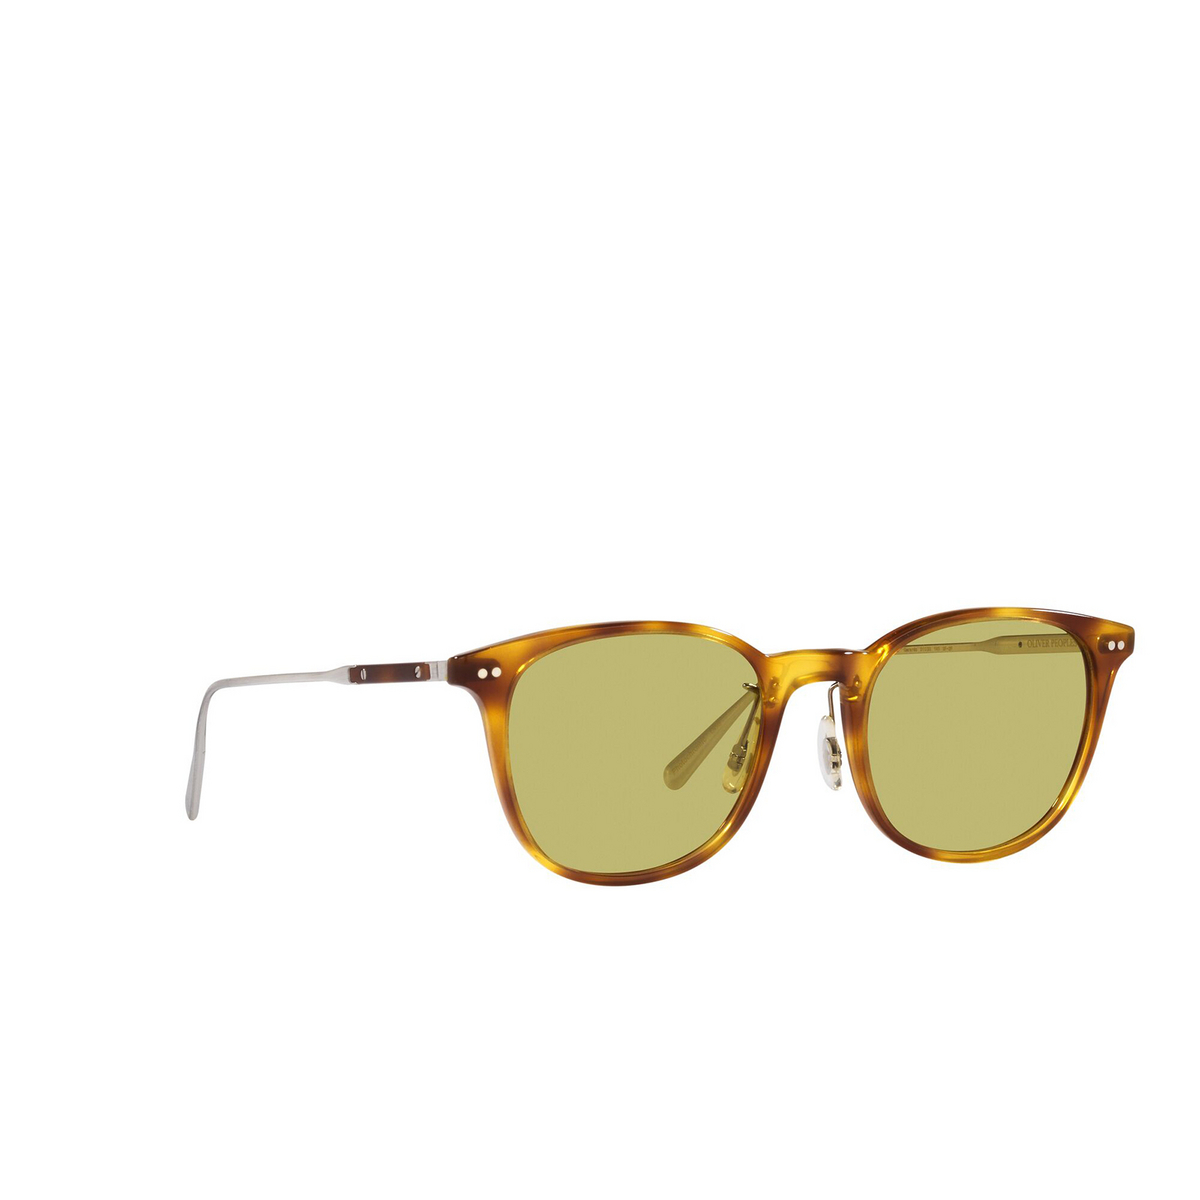 Oliver Peoples® Round Sunglasses: OV5482S Gerardo color 14084C Vintage Lbr / Brushed Silver - three-quarters view